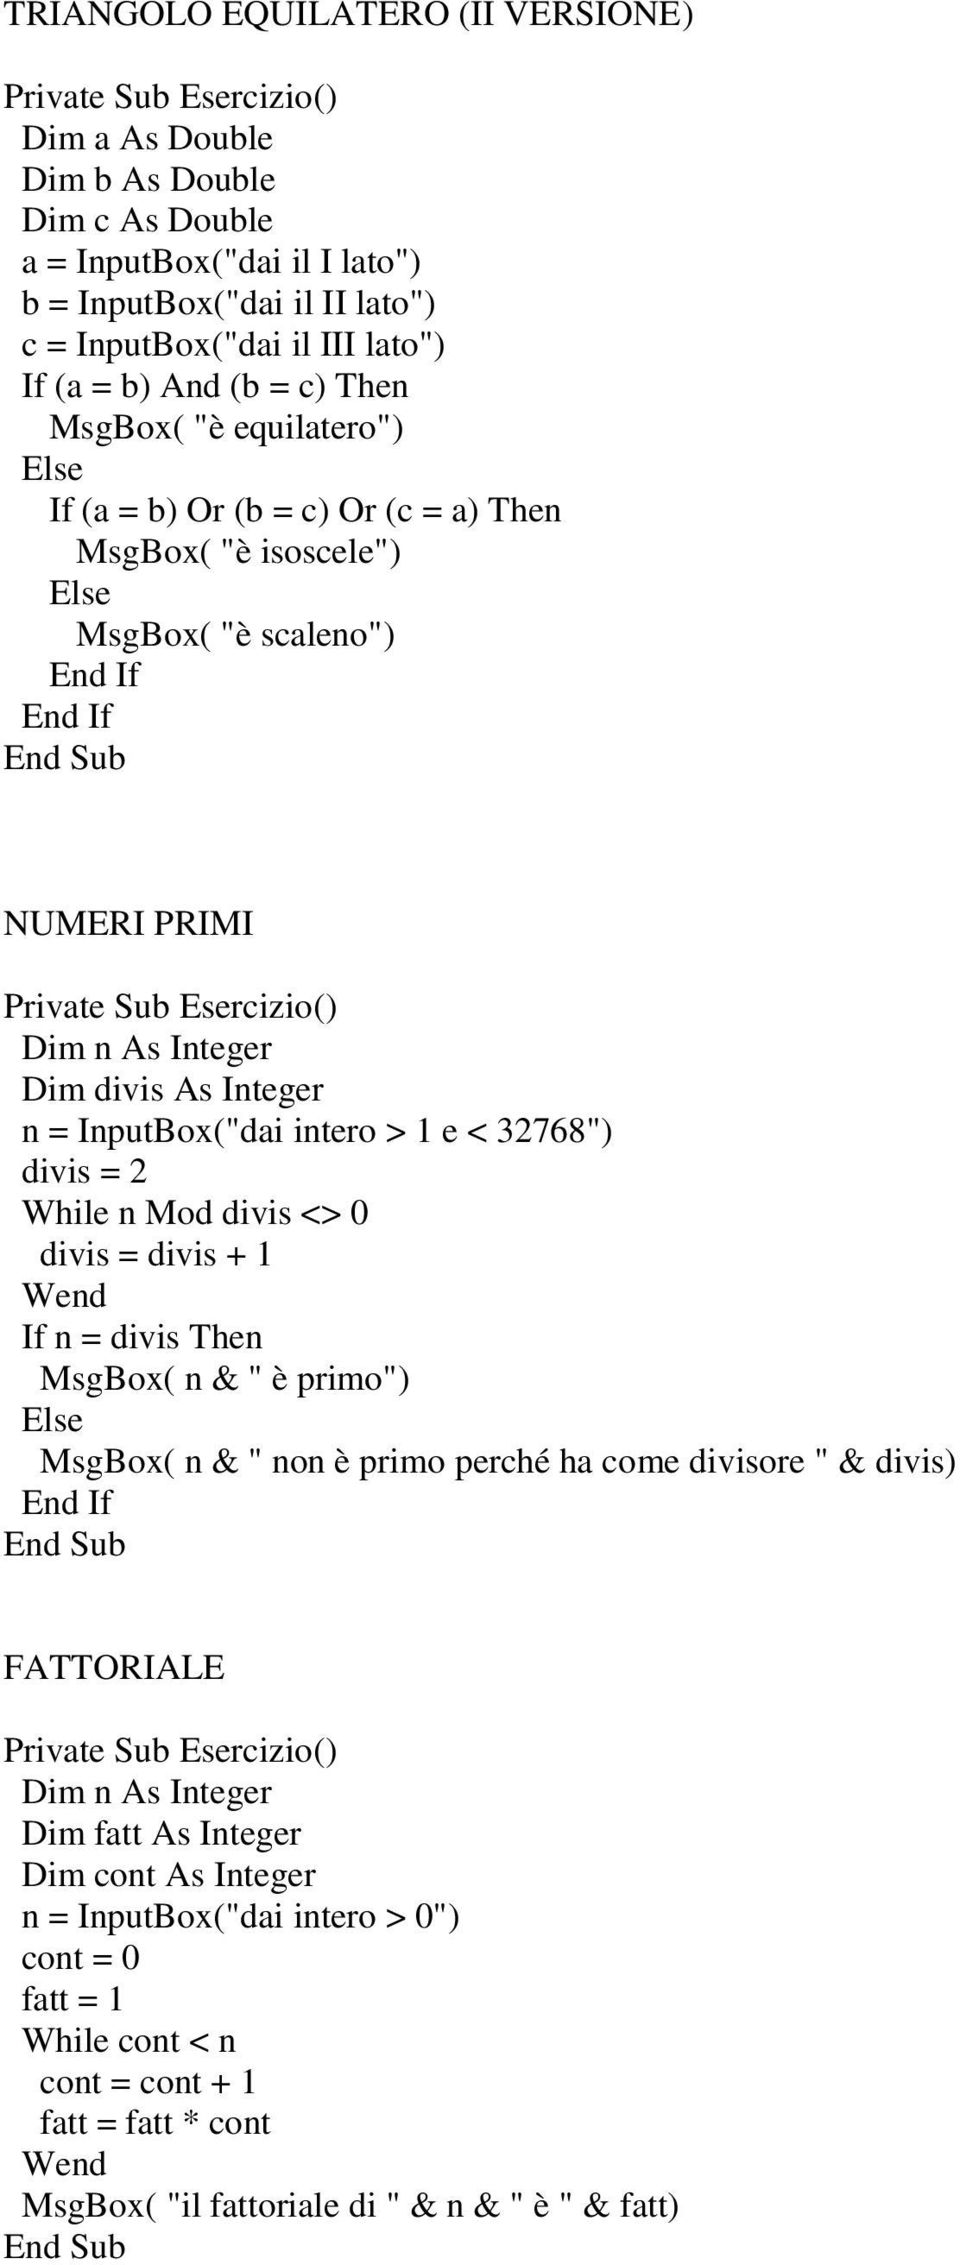 n = InputBox("dai intero > 1 e < 32768") divis = 2 While n Mod divis <> 0 divis = divis + 1 If n = divis Then MsgBox( n & " è primo") MsgBox( n & " non è primo perché ha come